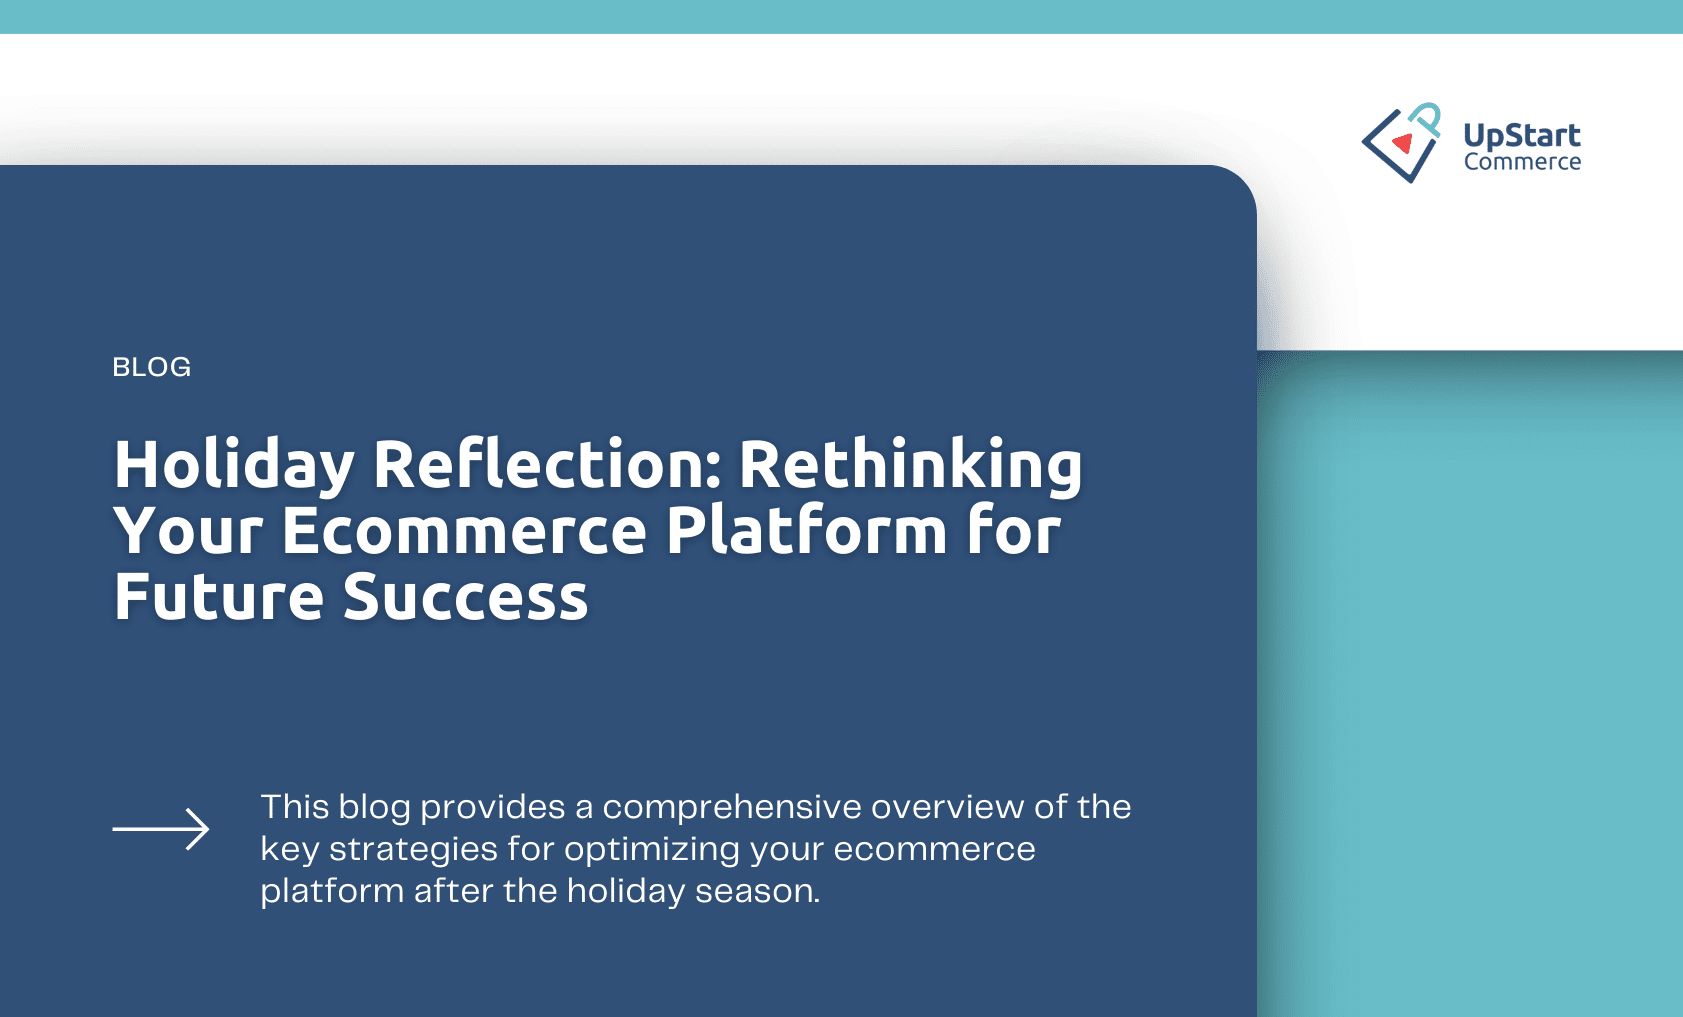 Holiday Reflection: Rethinking Your Ecommerce Platform for Future Success